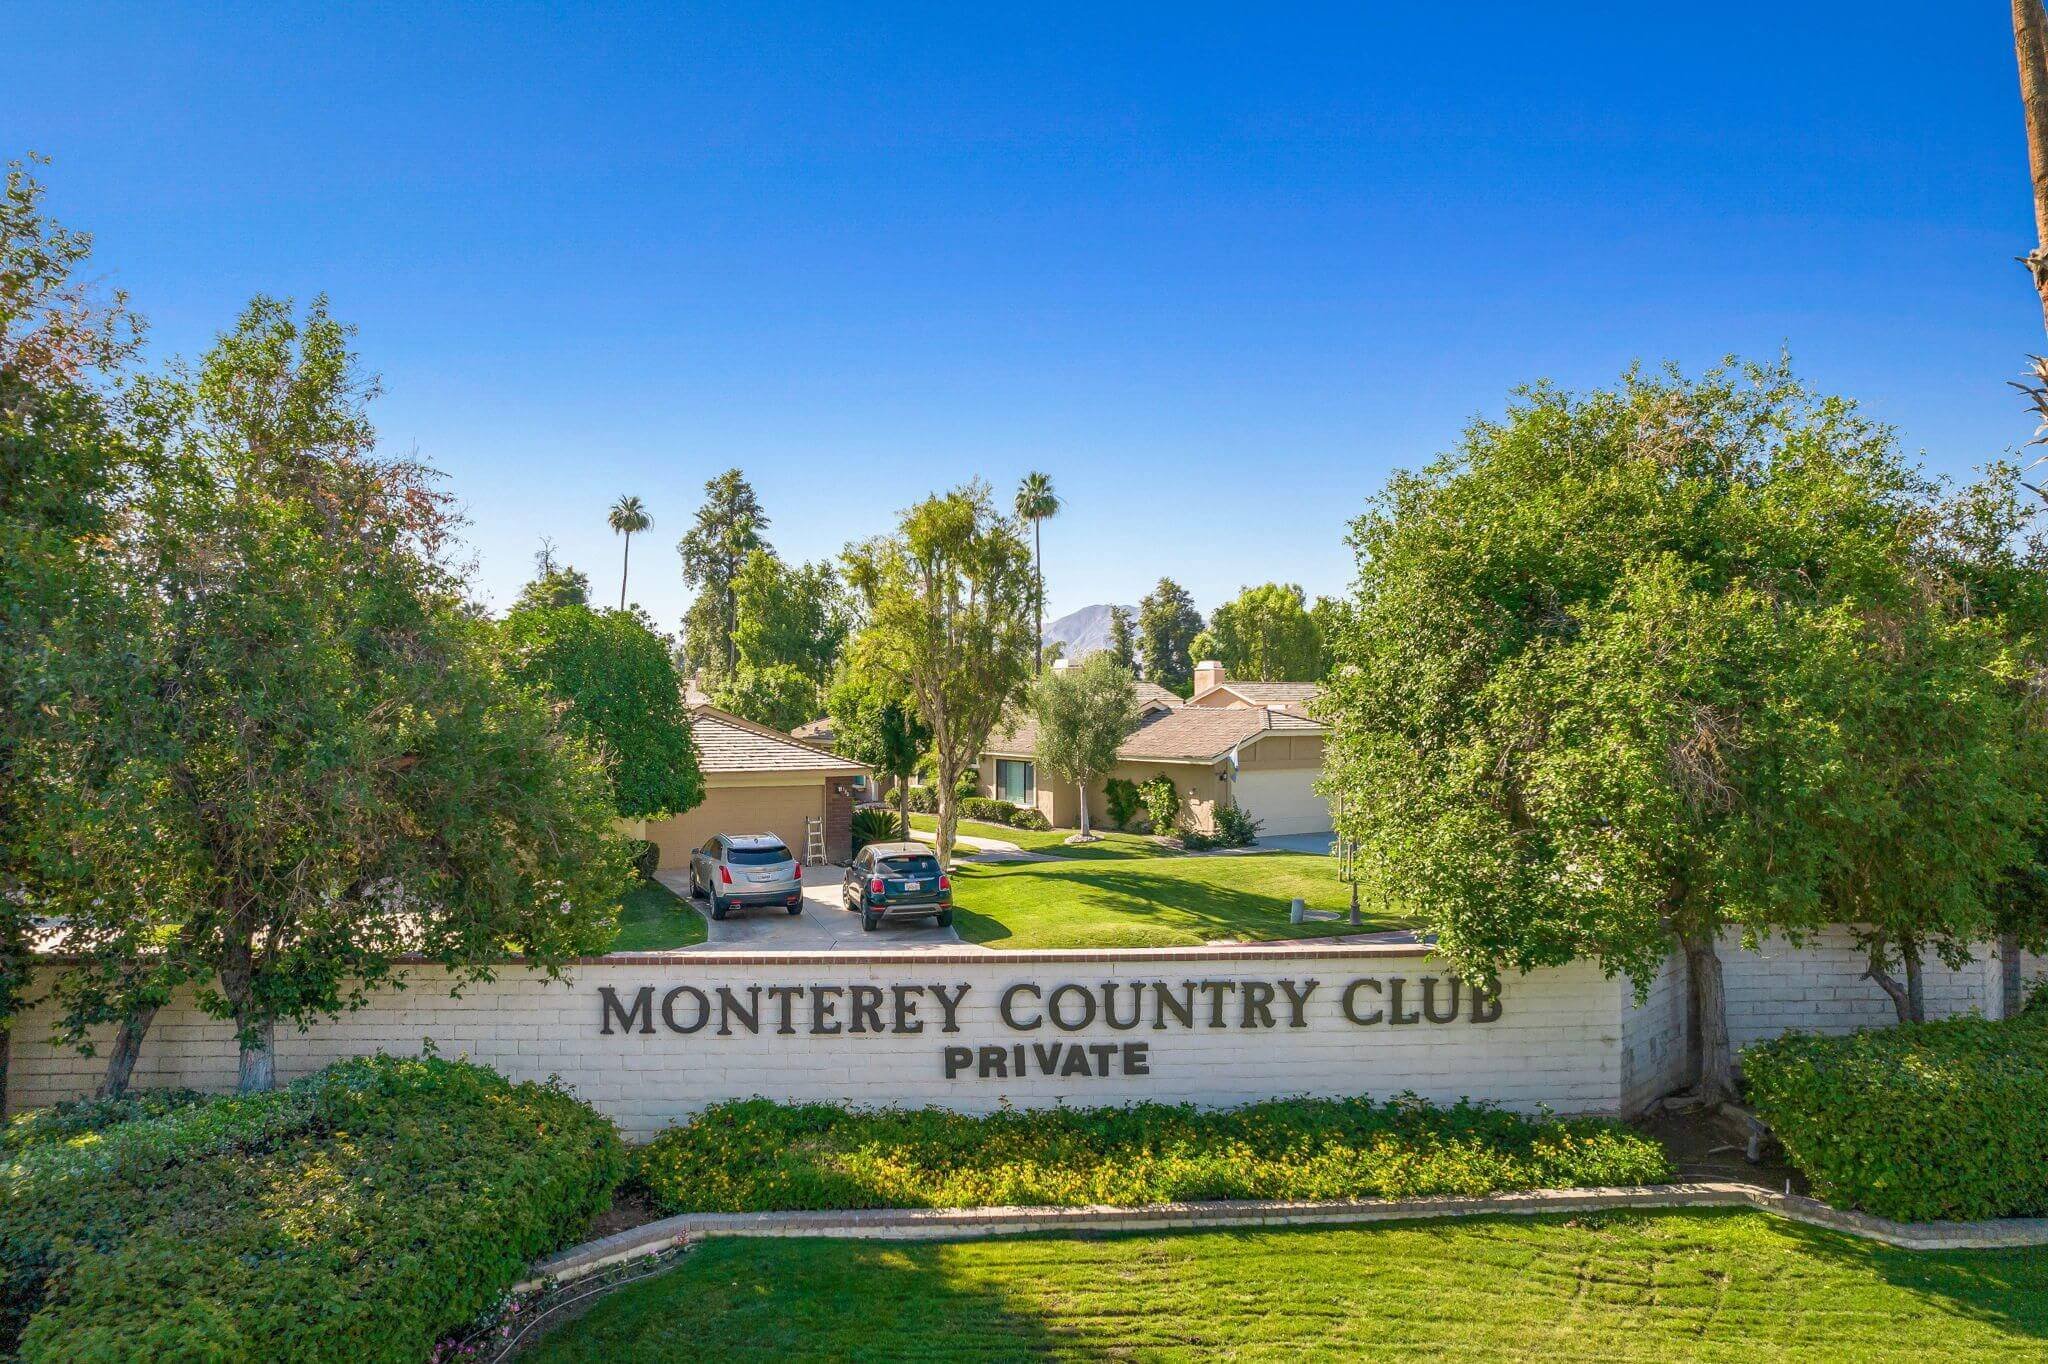 Monterey Country Club Palm Desert 92260